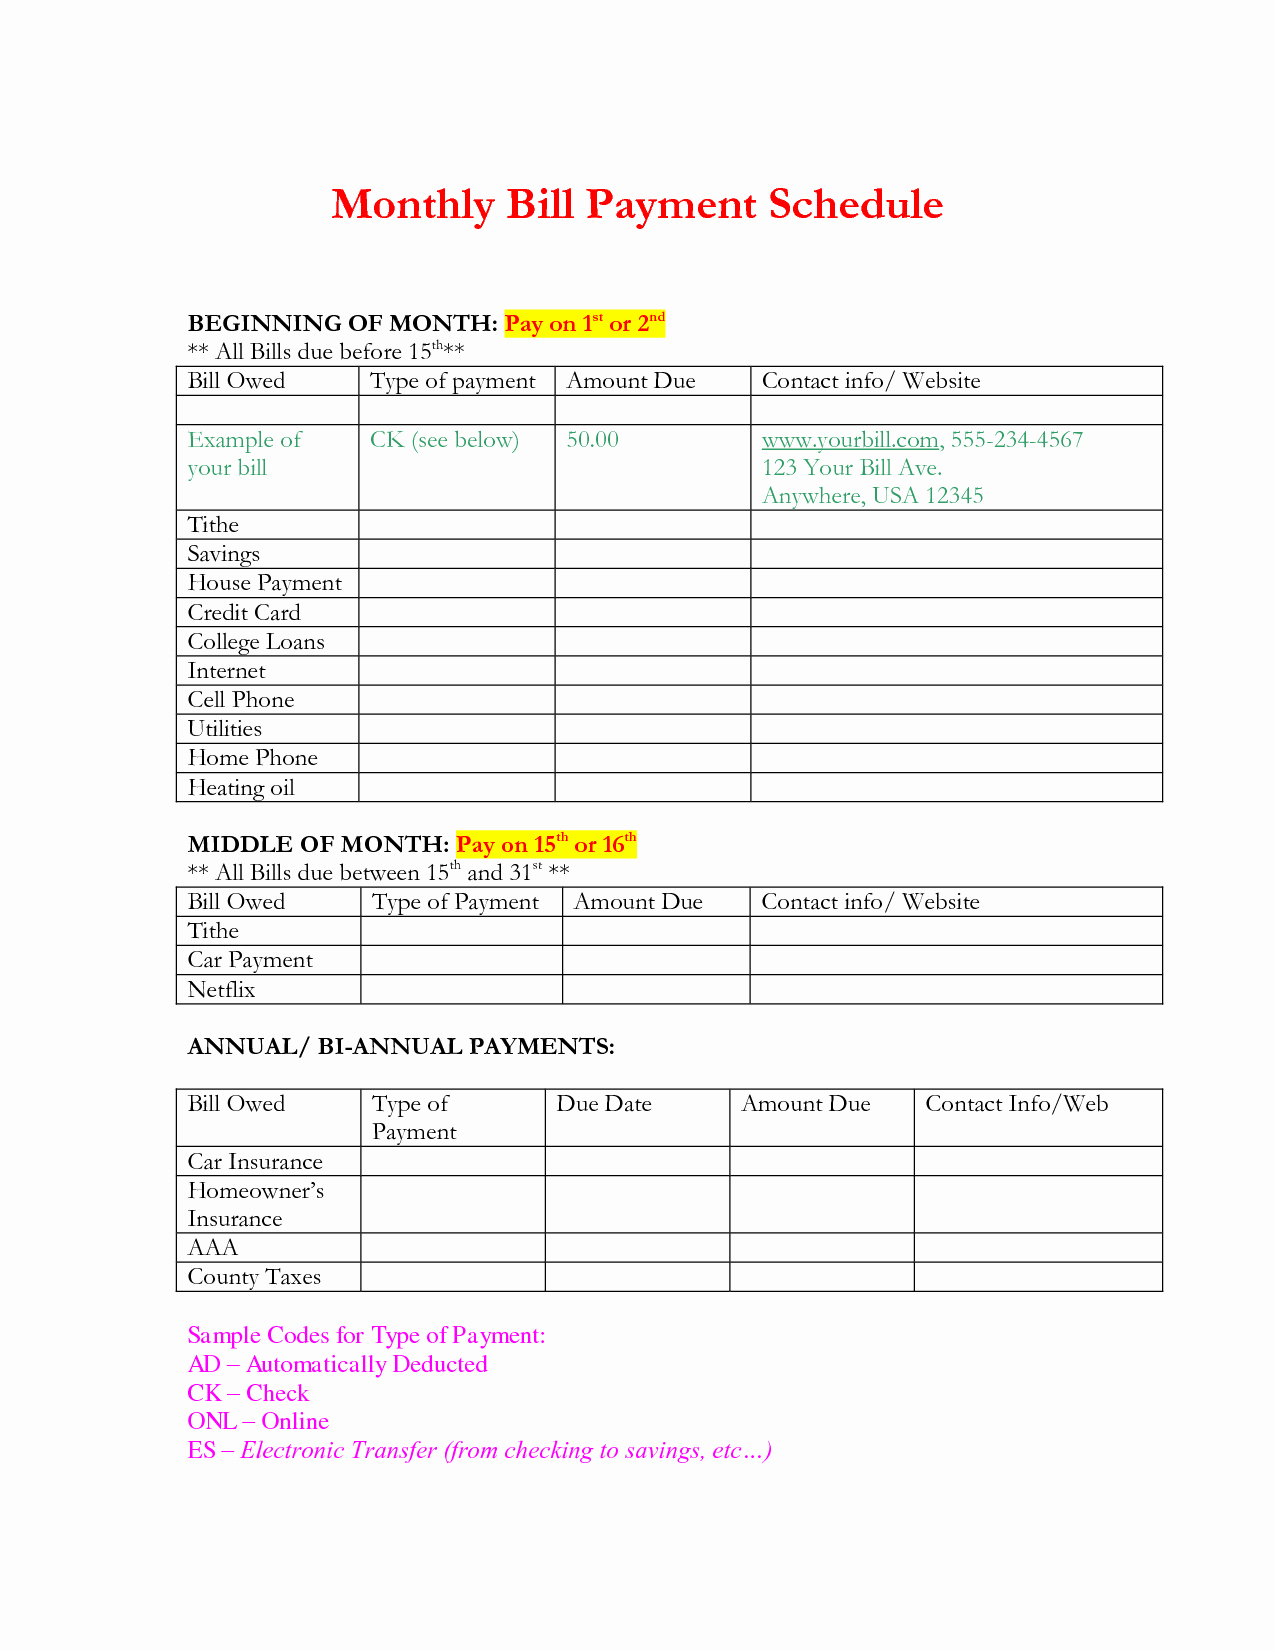 Bill Payment Schedule Template Luxury Printable Monthly Bill Payment Schedule and Checklist